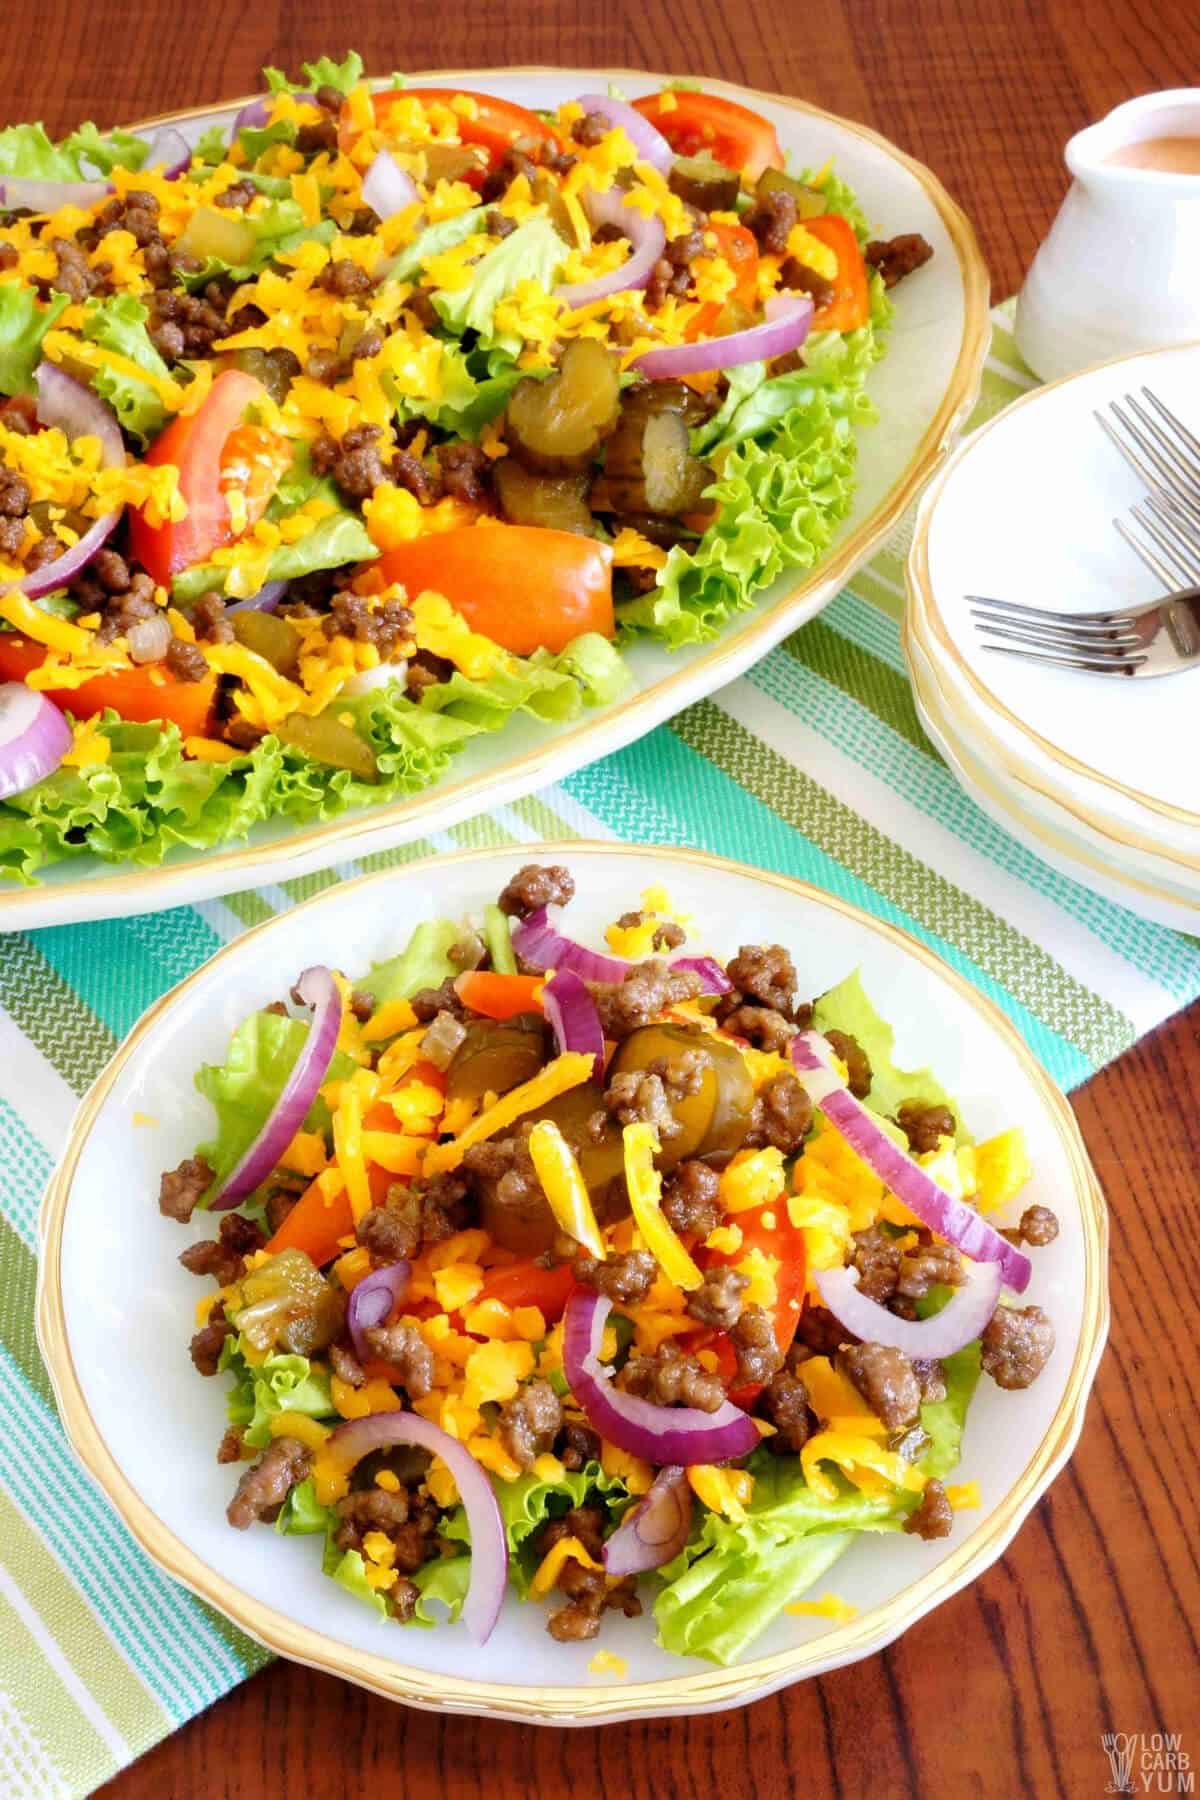 low carb salad big mac alternative for following keto food pyramid